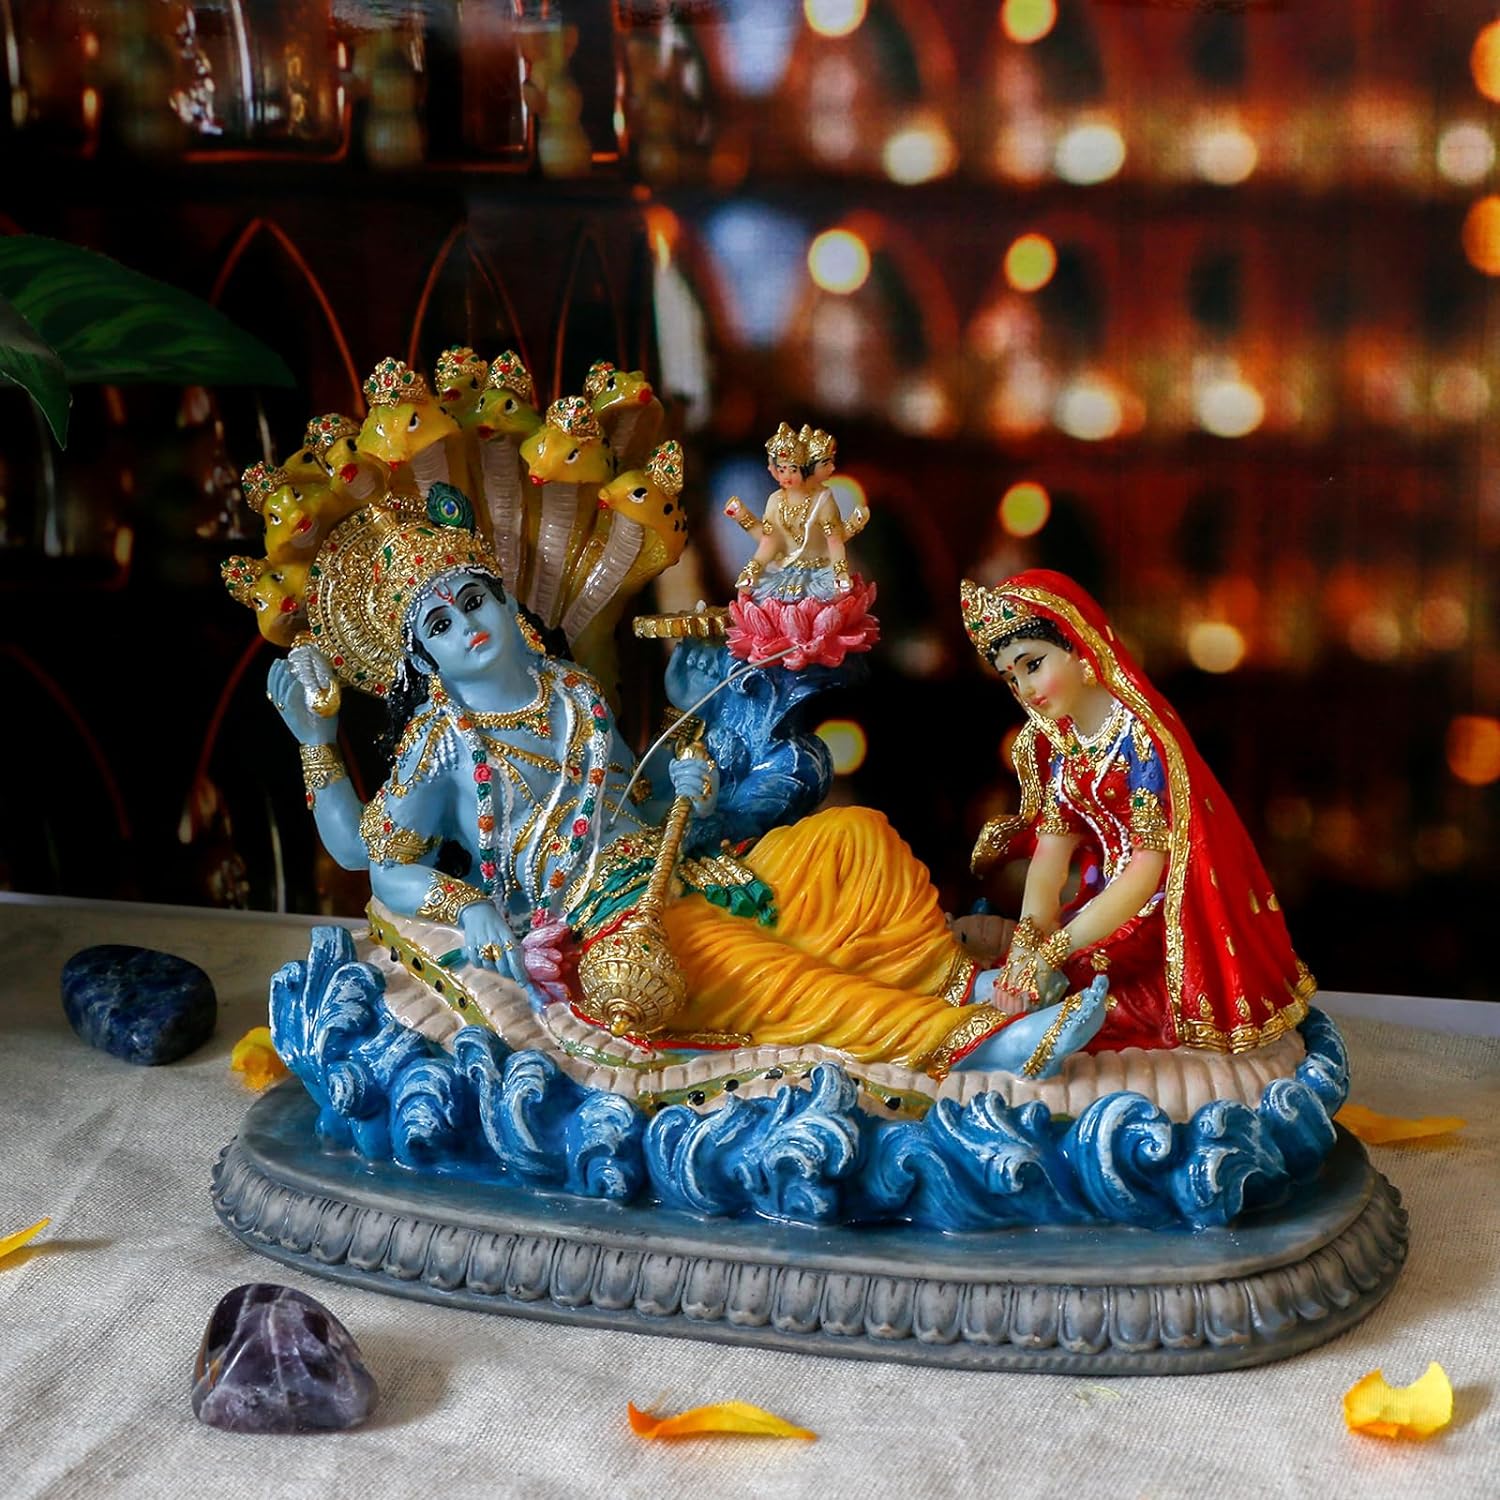 alikiki Hindu God Lord Vishnu Statue - 8.3”L Mahavishnu Figurine Divine Hindu Deity for Spiritual Worship Home Office Studio Hotel Decor Mandir Temple Altar Diwali Puja Item